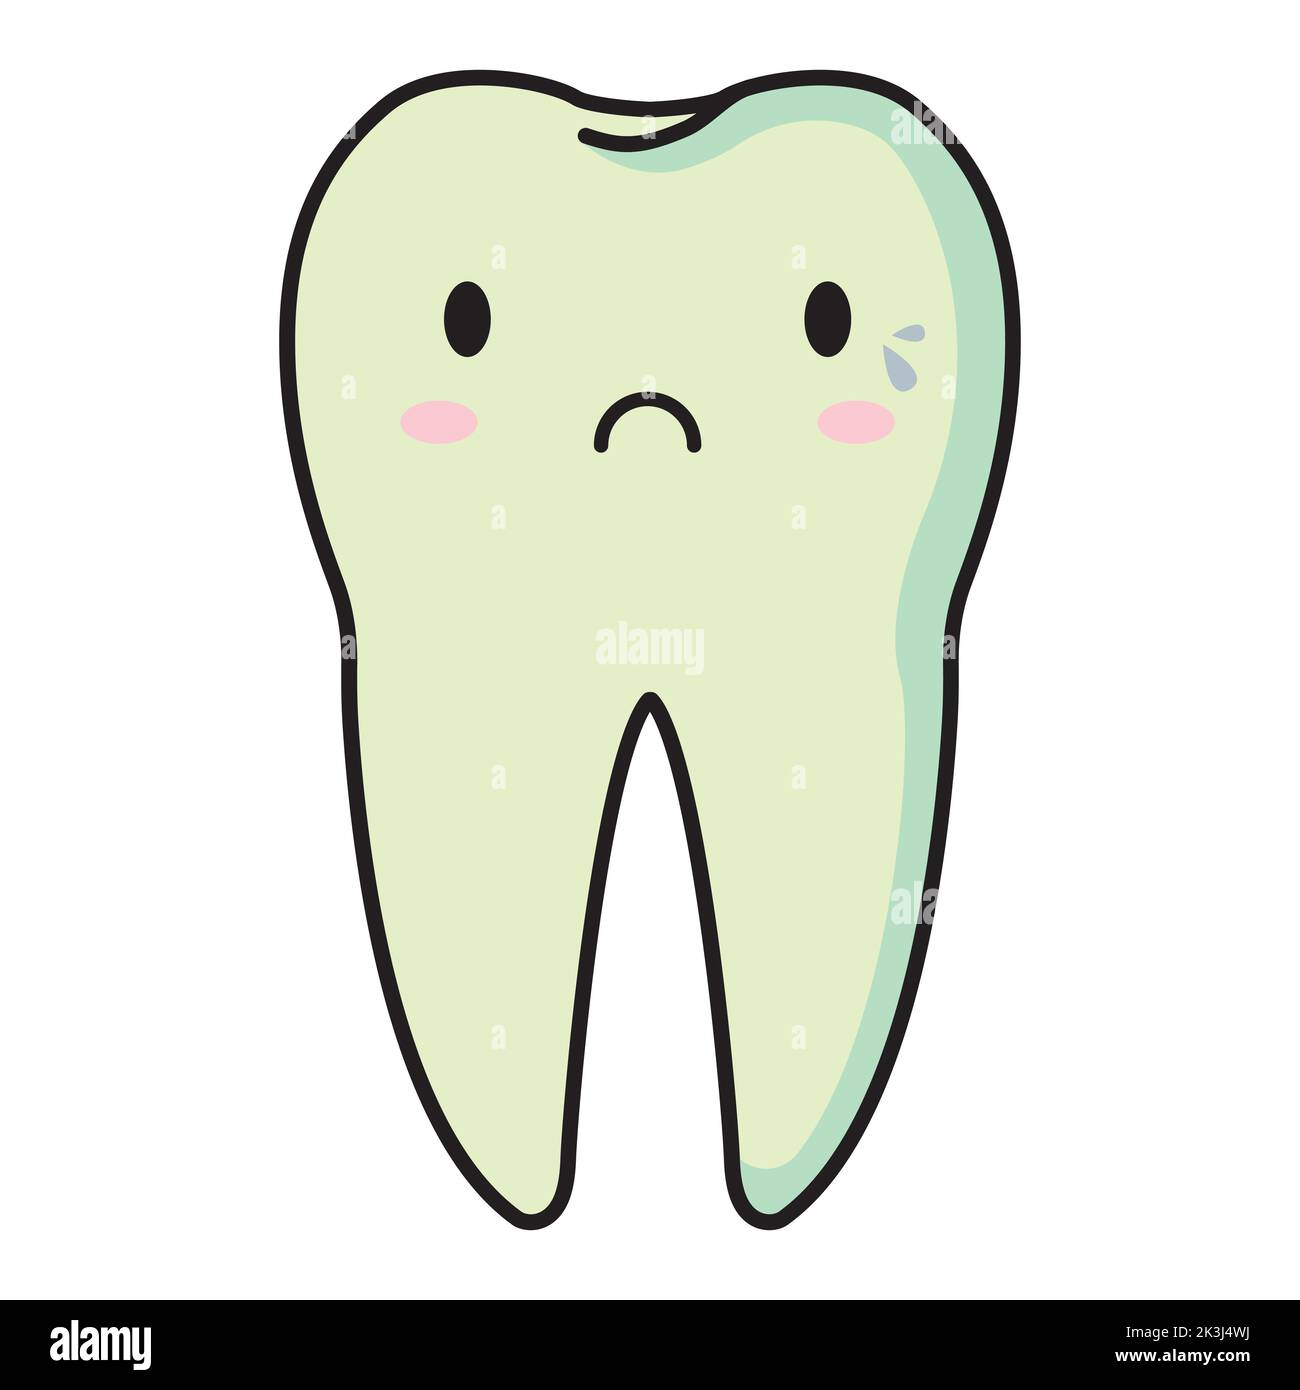 Cartoon flat illustration of a sick tooth. Kawaii sad tooth. Vector illustration. Stock Vector